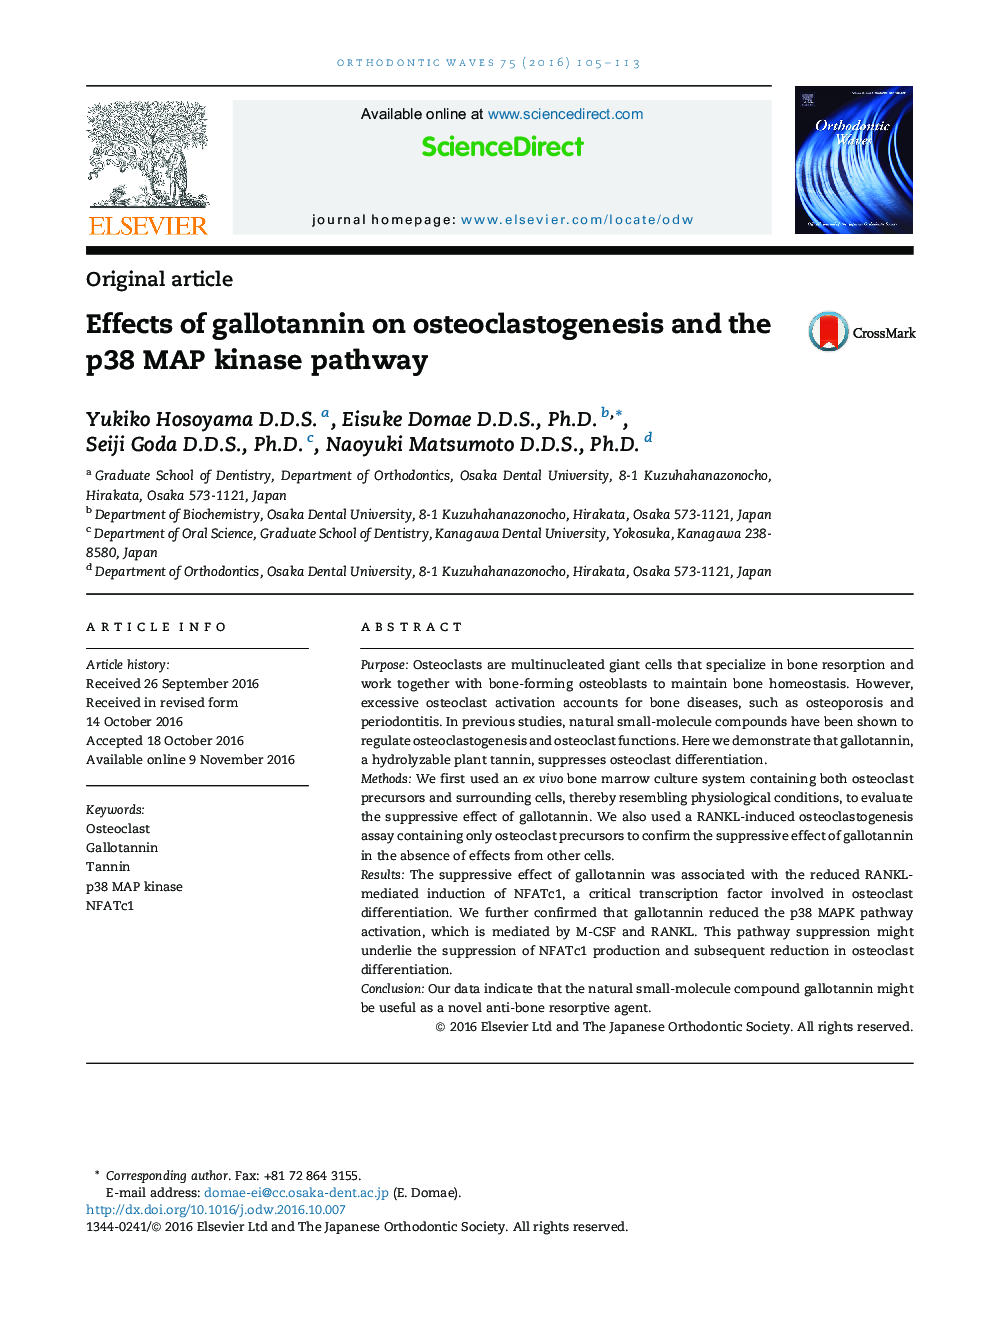 Effects of gallotannin on osteoclastogenesis and the p38 MAP kinase pathway